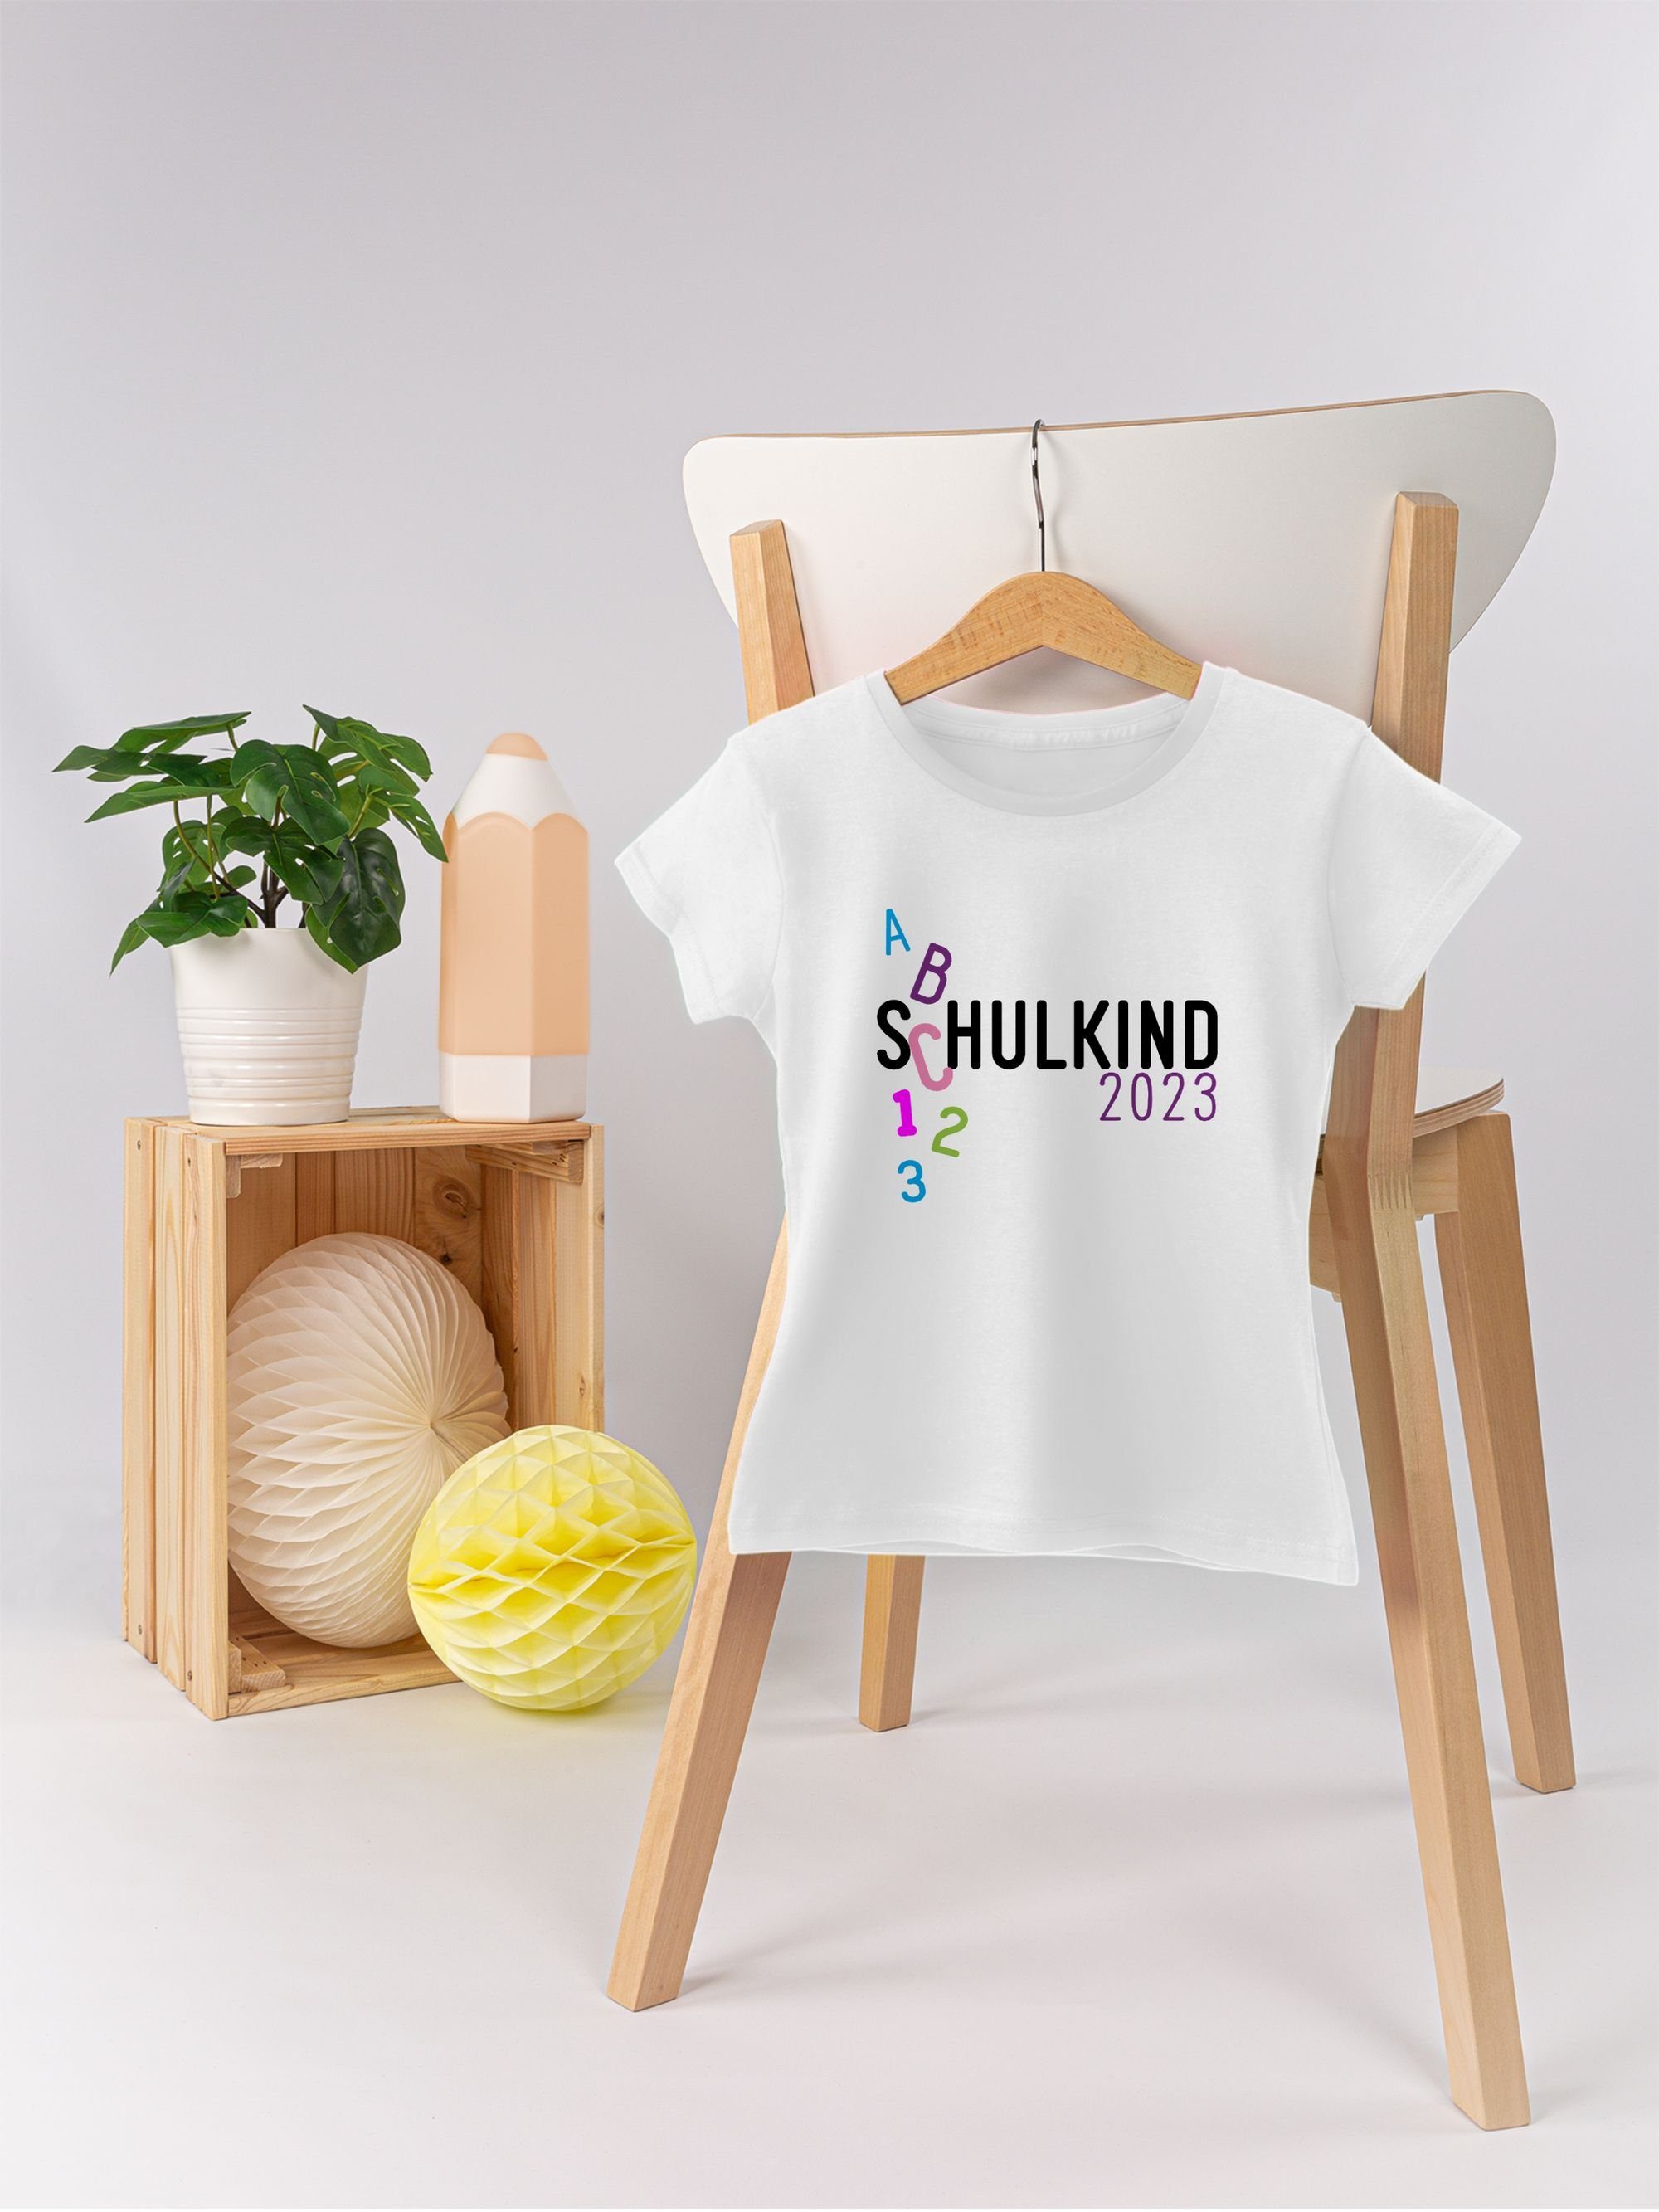 Schulkind Weiß Mädchen Shirtracer Einschulung ABC T-Shirt 2023 2 rosa